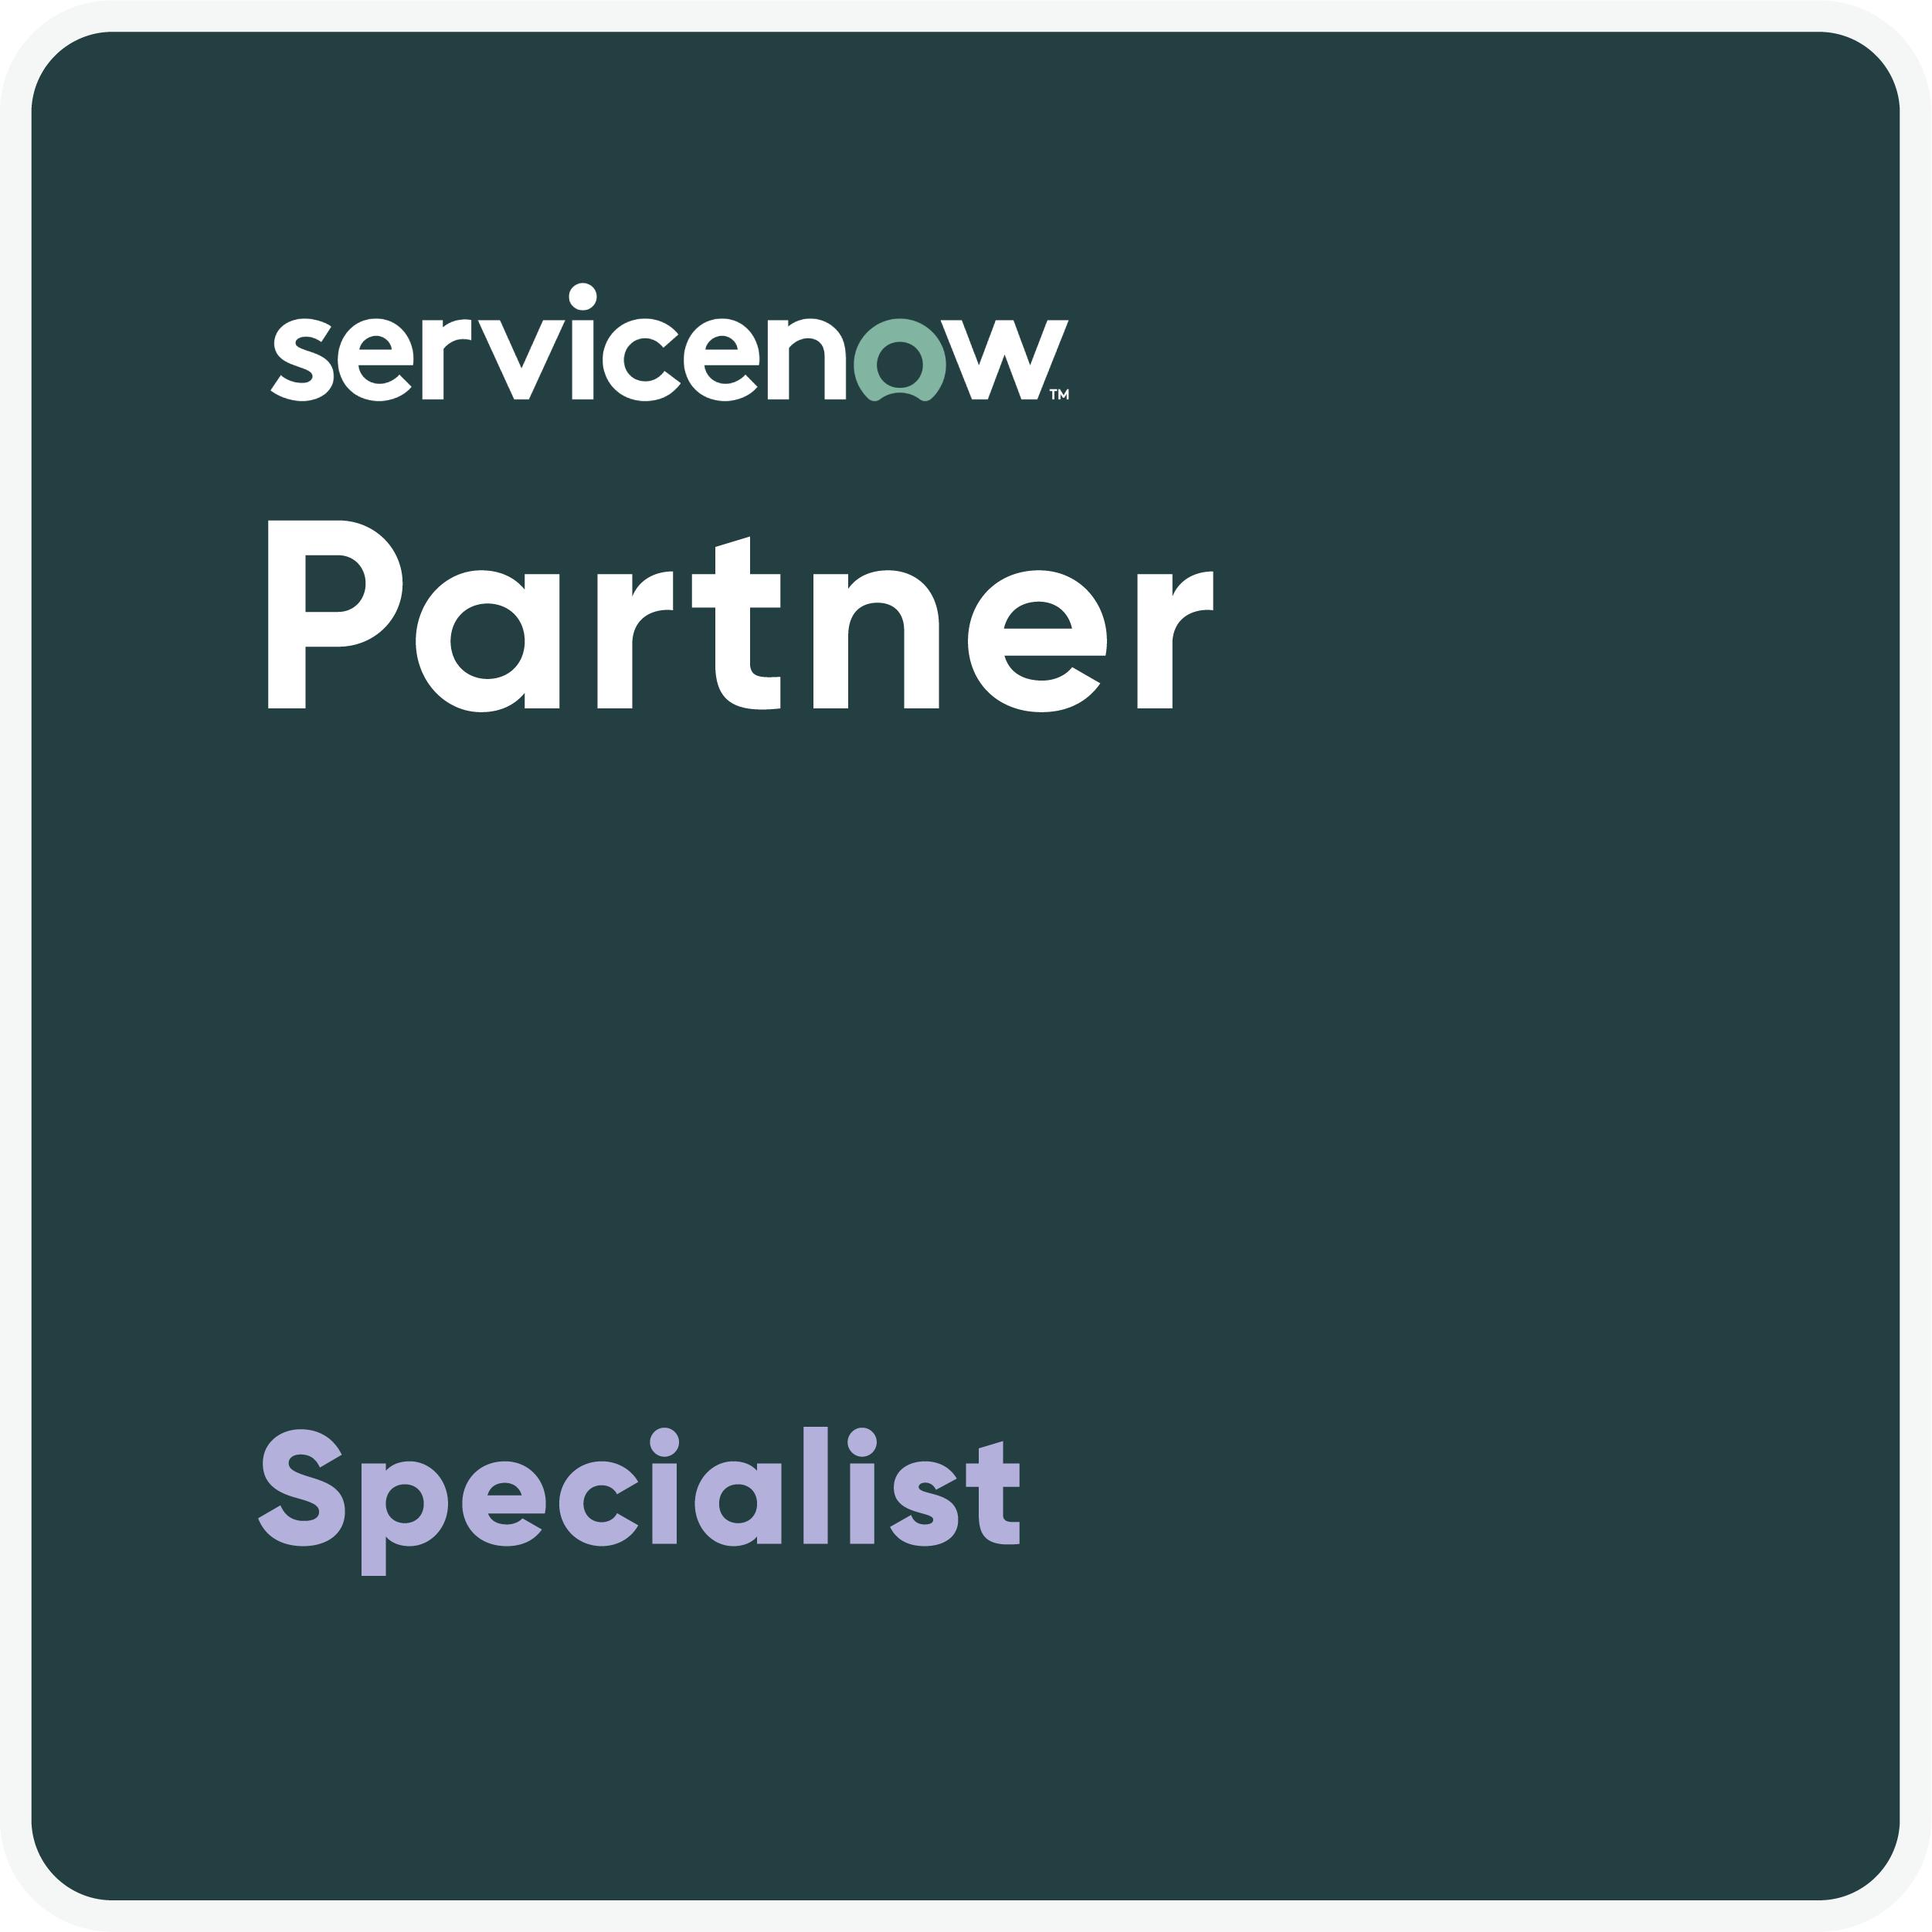 Service Now Partner logo.